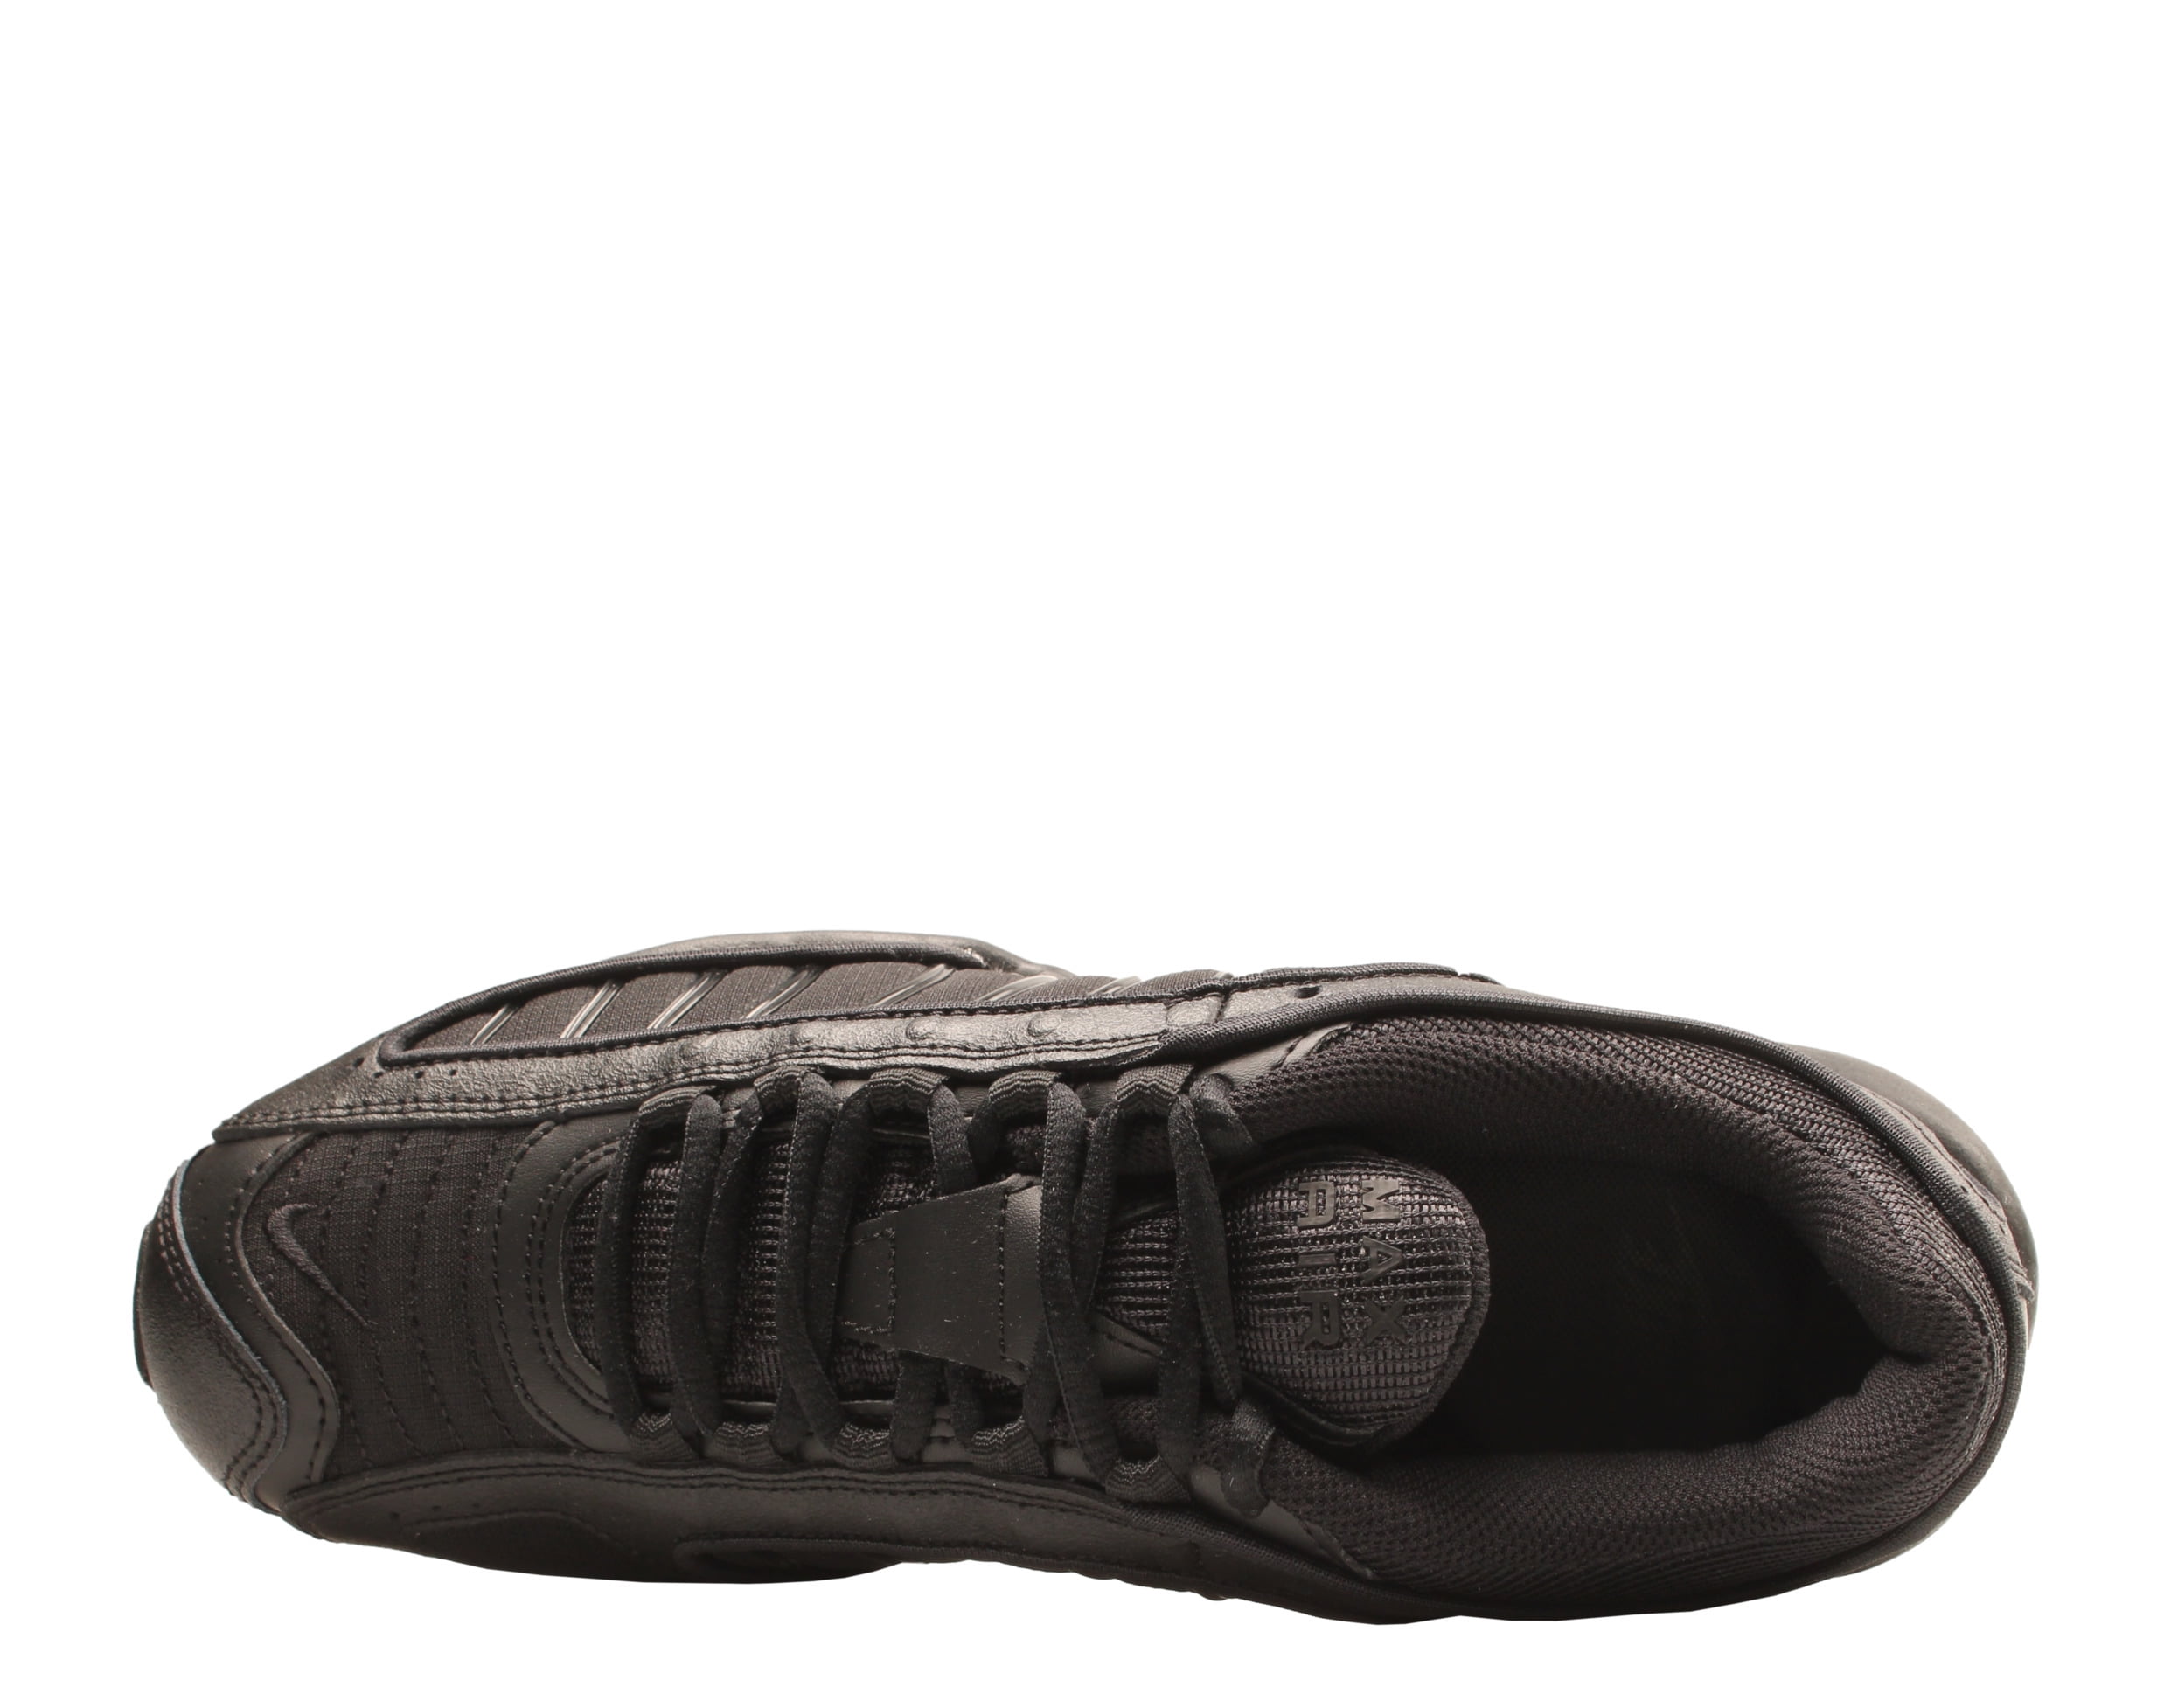 Nike Air Max Tailwind IV "Triple Men's Shoes Black aq2567-005 -